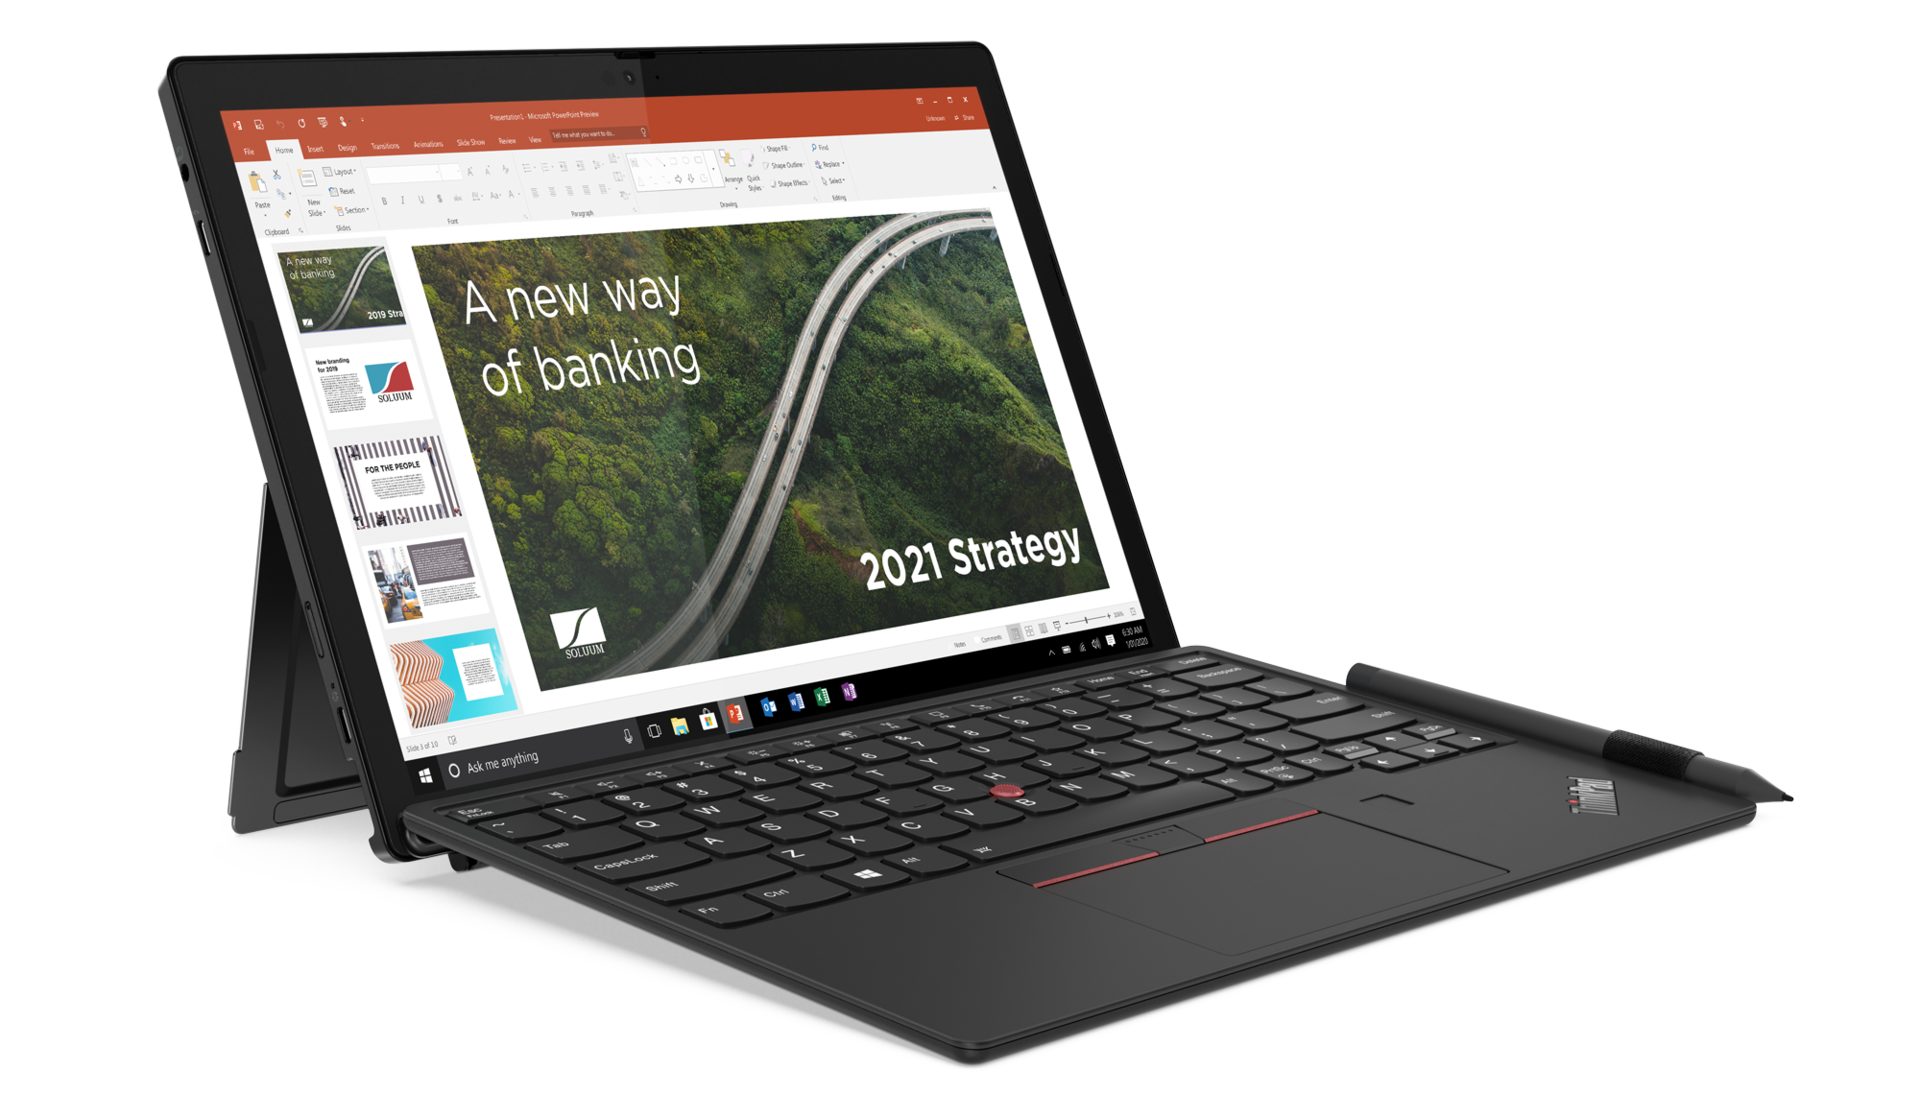 csm ThinkPad X12 Detachable 02 2fca33cc61 CES 2021: Lenovo launches ThinkPad X12 Detachable Tablet